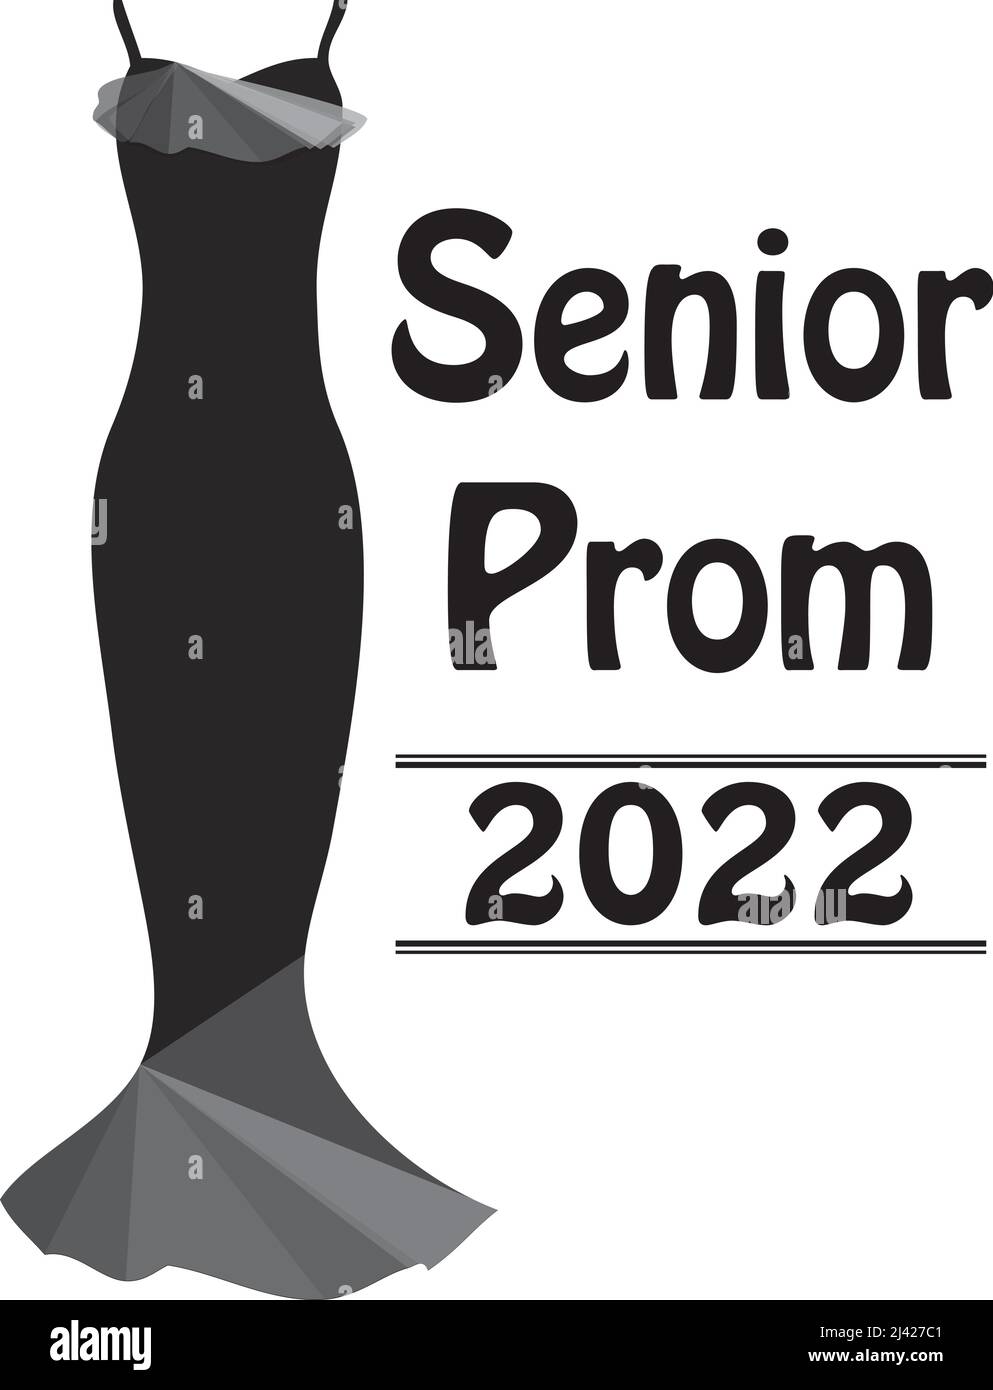 Senior Prom 2022 Formal Dress Graphic Stock Vector